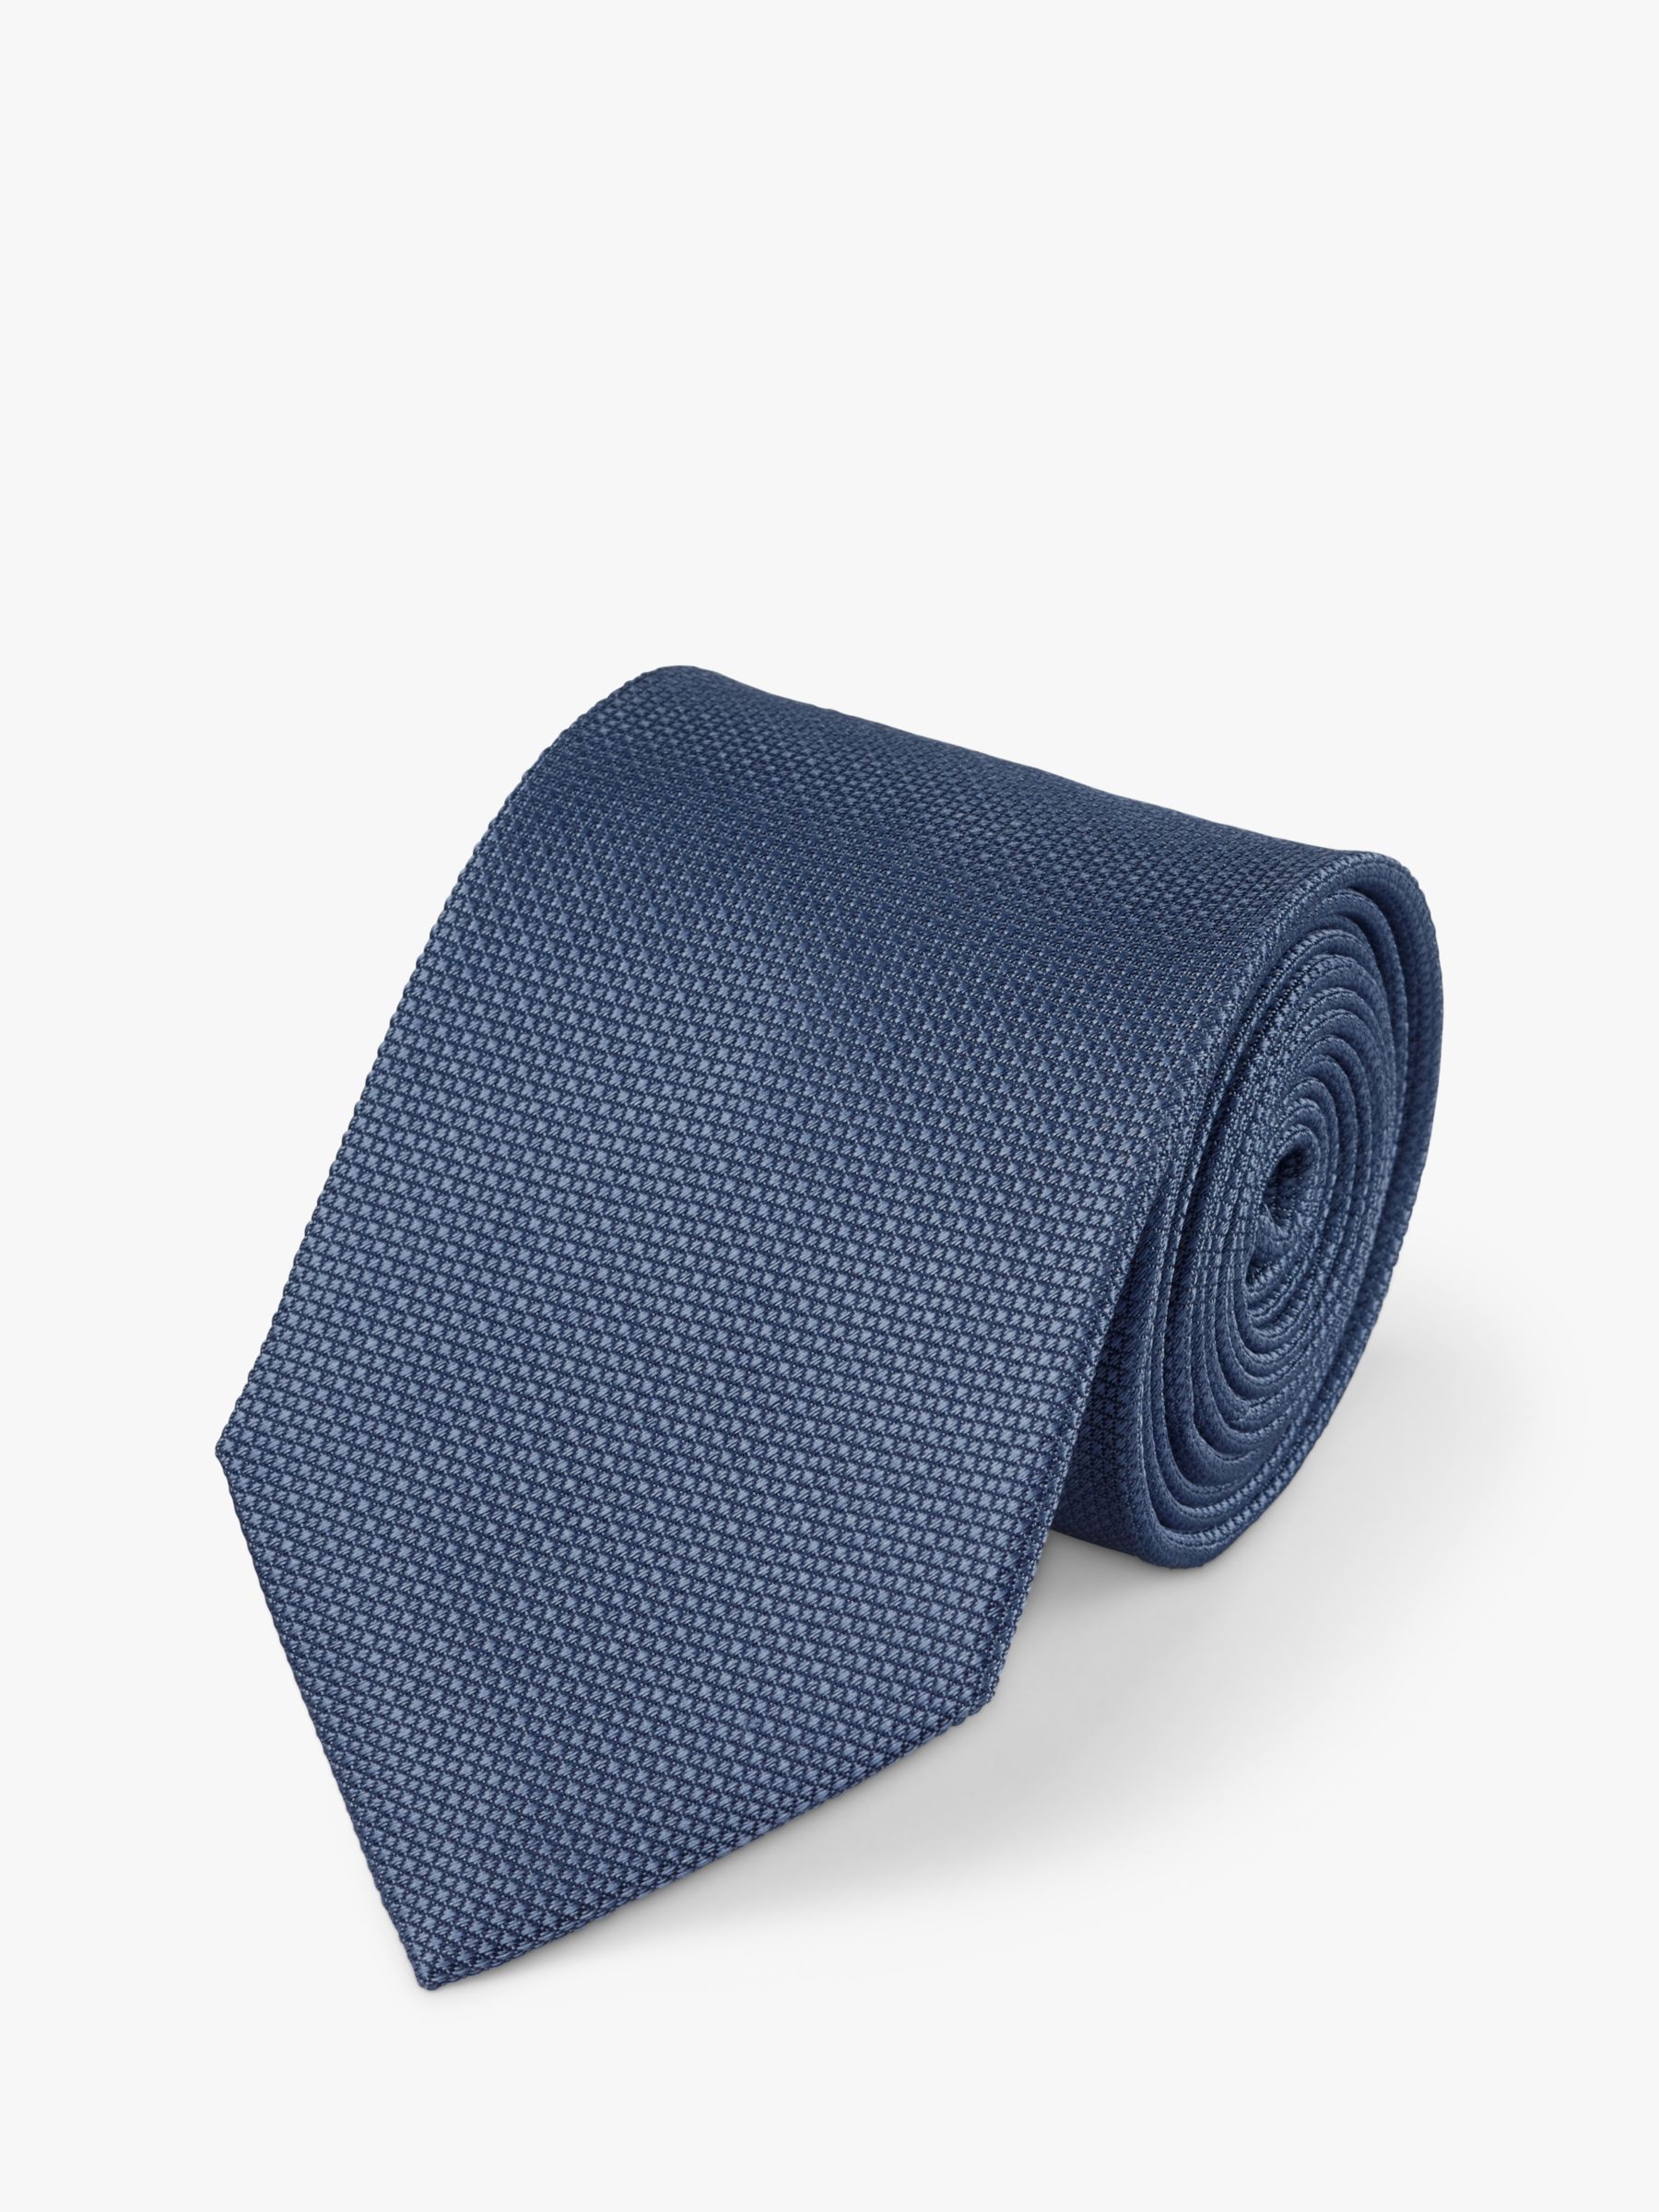 Buy Charles Tyrwhitt Stain Resistant Silk Tie Online at johnlewis.com